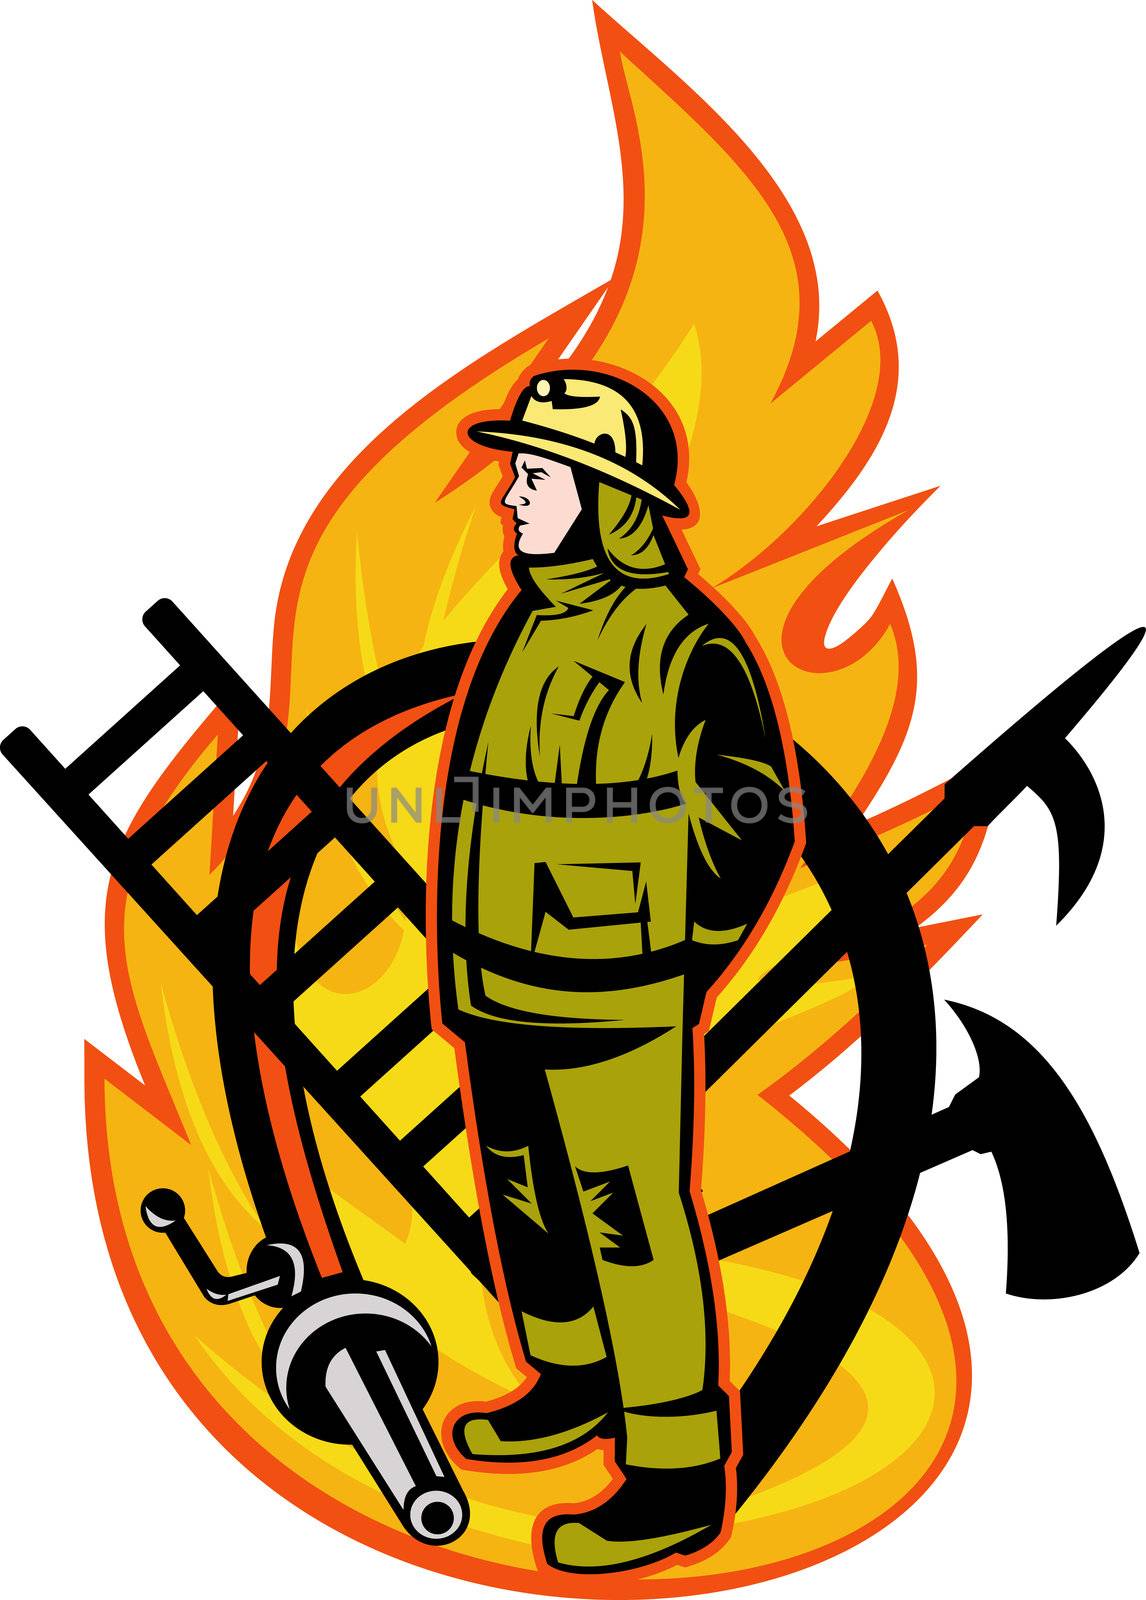 Fireman Firefighter axe ladder spear hook hose by patrimonio